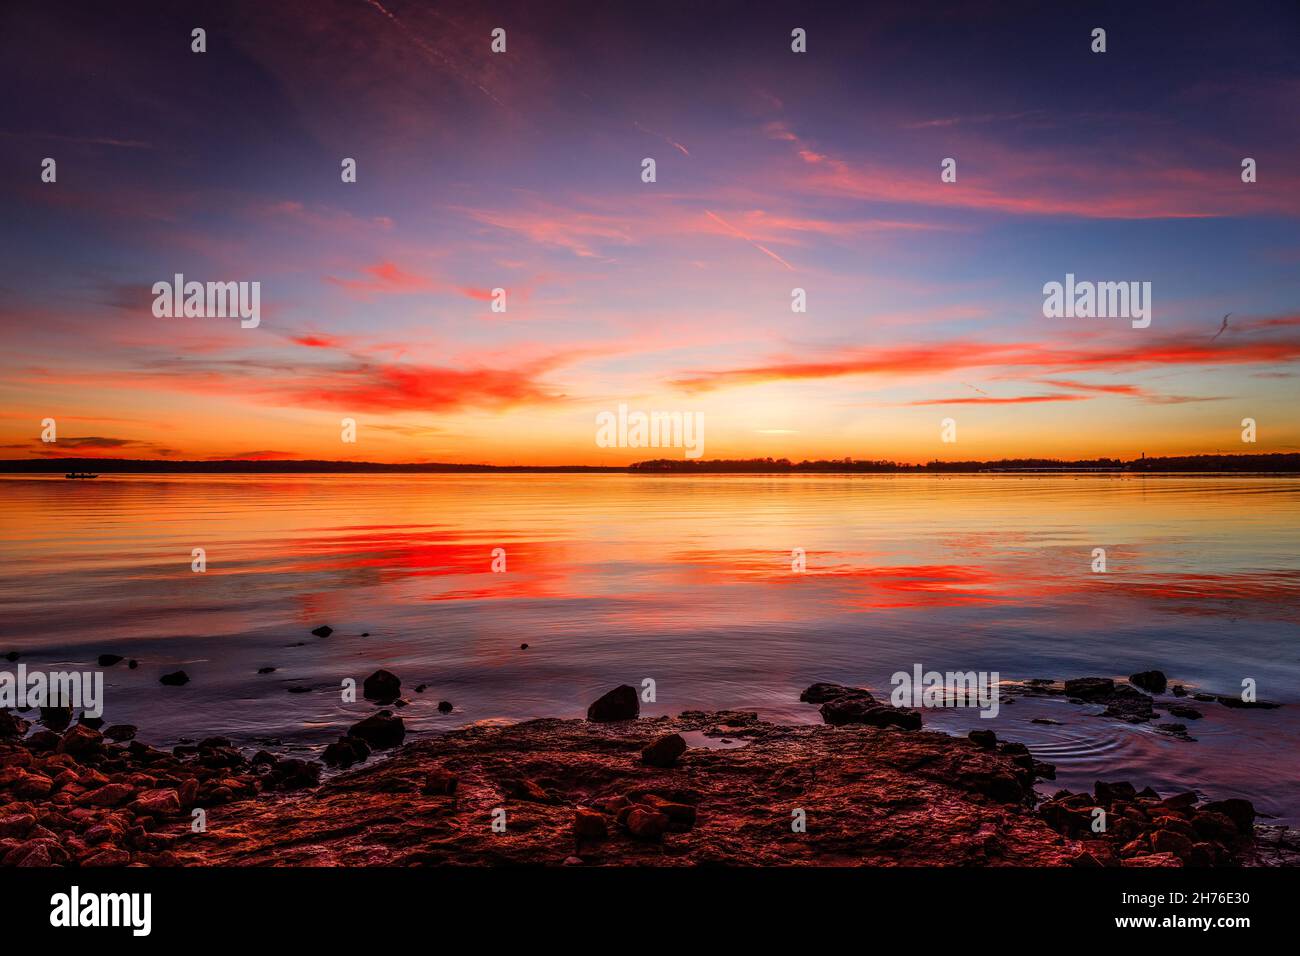 A beautiful sunset over lake Thunderbird in Norman Oklahoma. Stock Photo